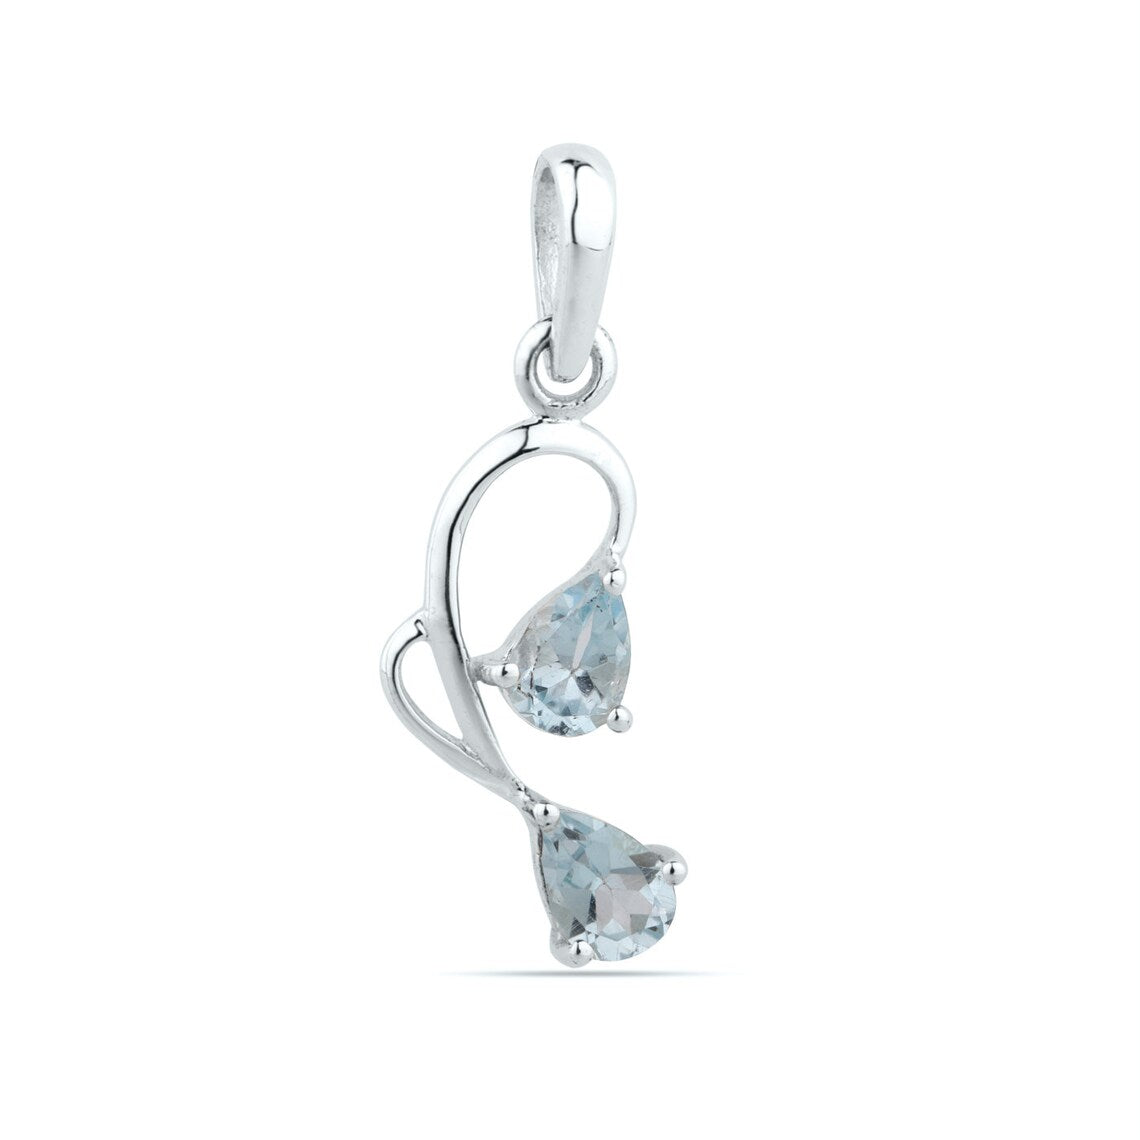 Blue topaz pendant, 5×7mm pear shaped Blue topaz necklace solitaire pendant, December birthstone, bridal pendant